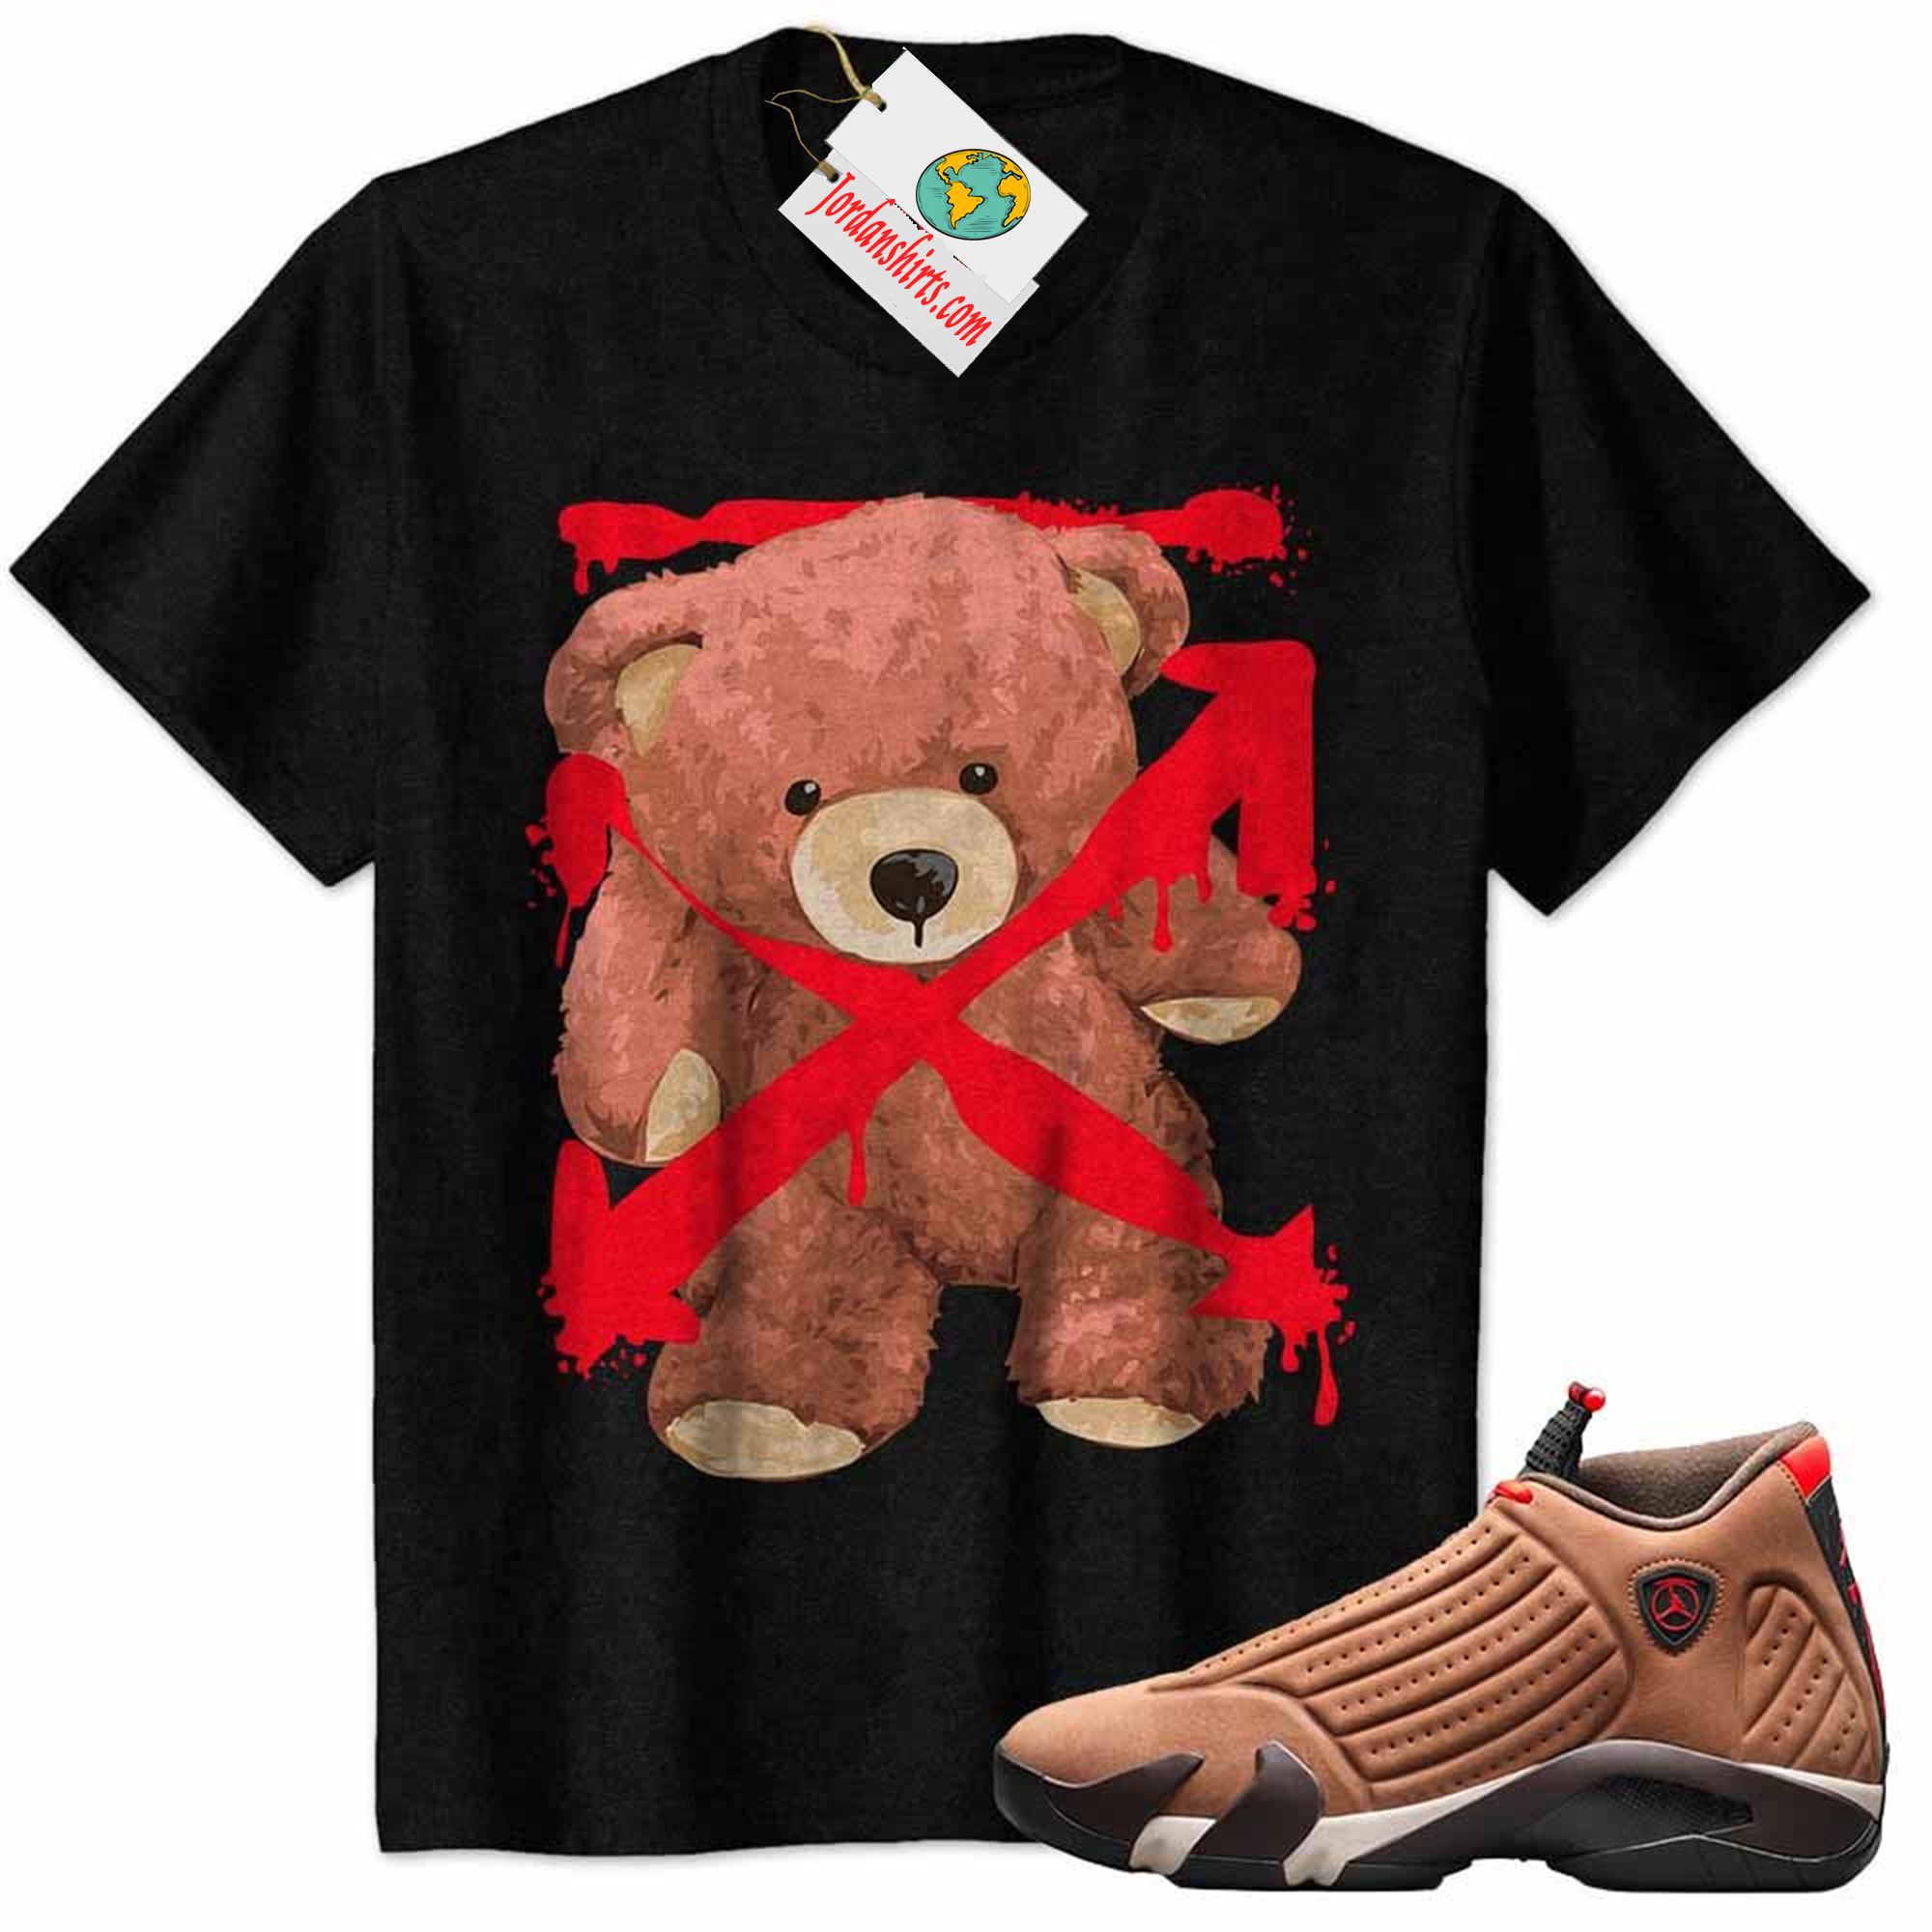 Jordan 14 Shirt, Teddy Bear Off White Paint Dripping Black Air Jordan 14 Winterized 14s Plus Size Up To 5xl